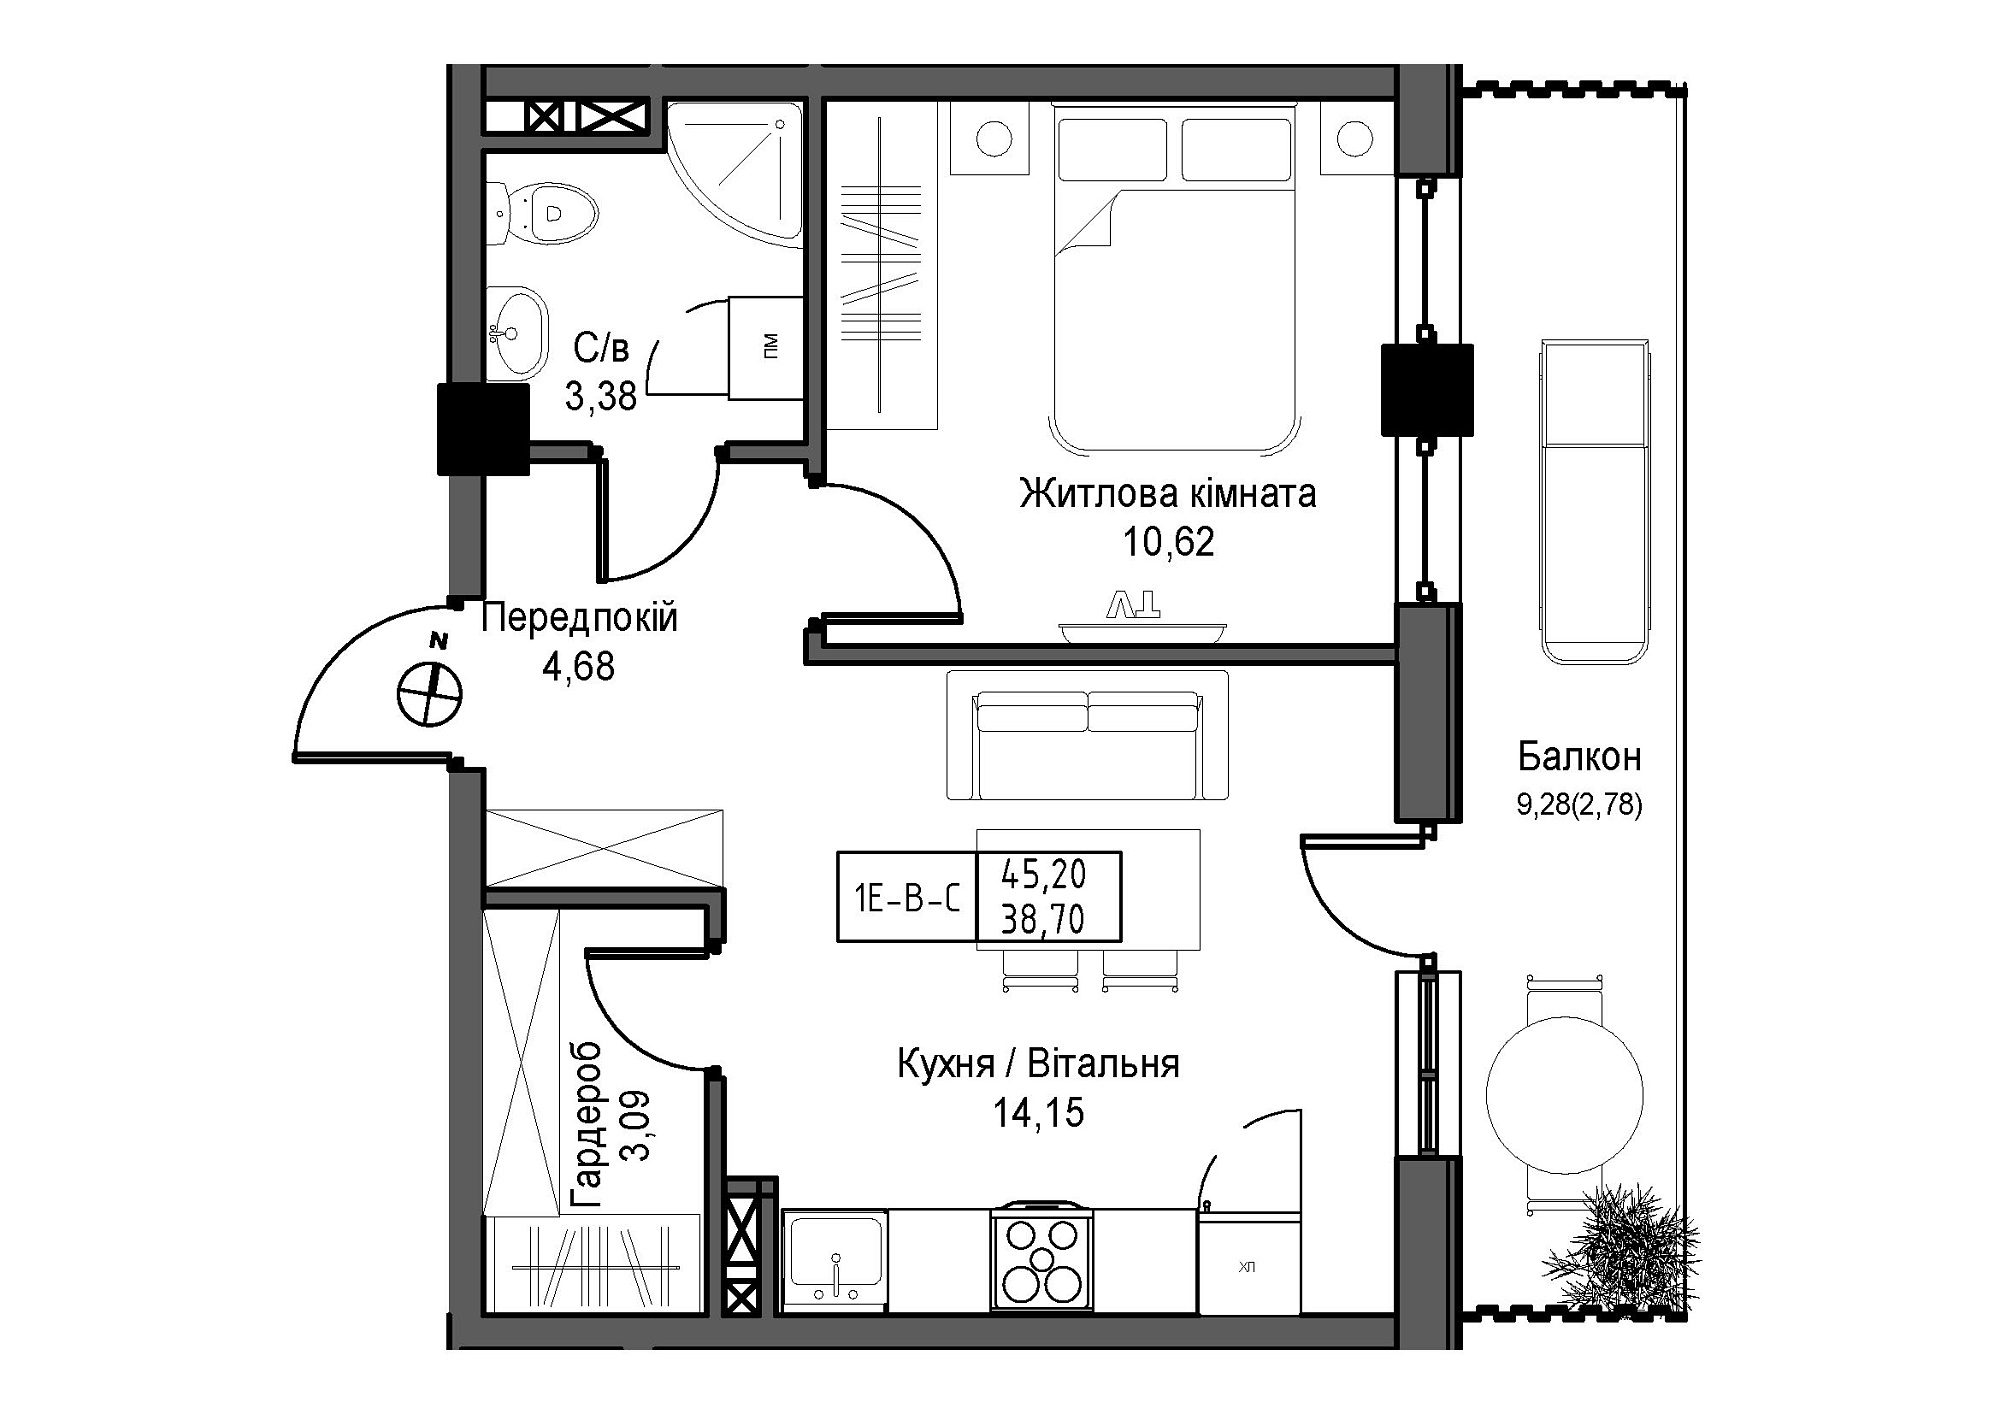 Планування 1-к квартира площею 38.7м2, UM-007-10/0006.